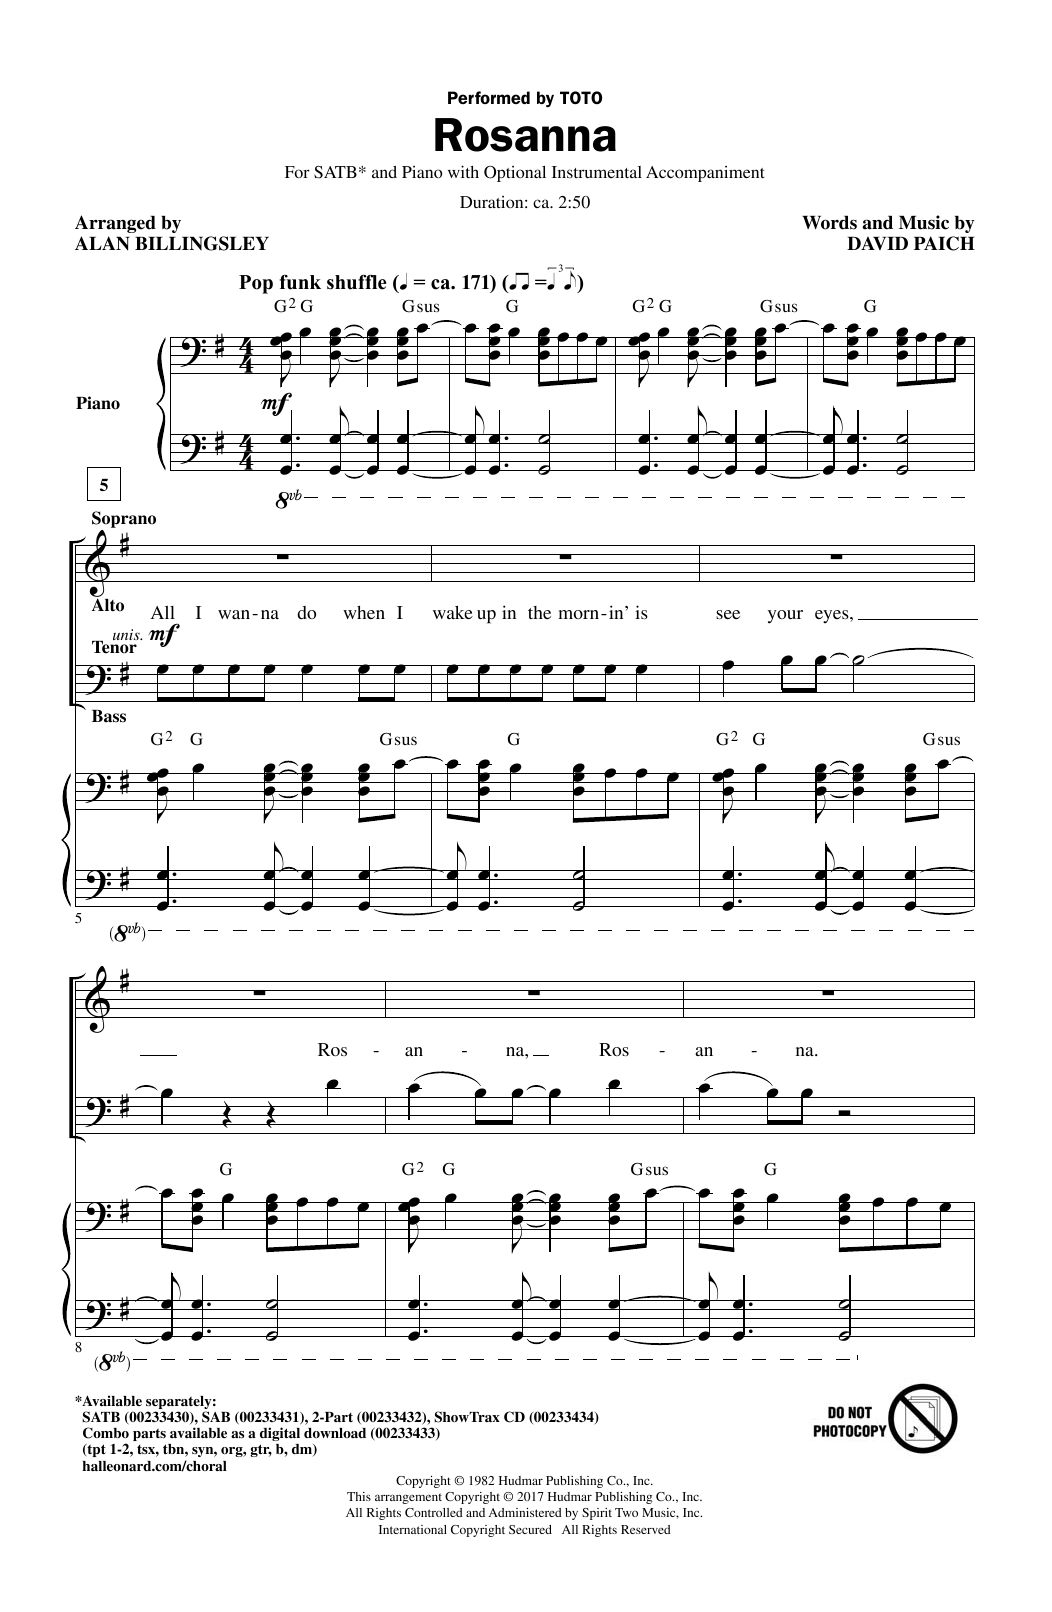 Toto Rosanna (arr. Alan Billingsley) sheet music notes and chords arranged for SAB Choir